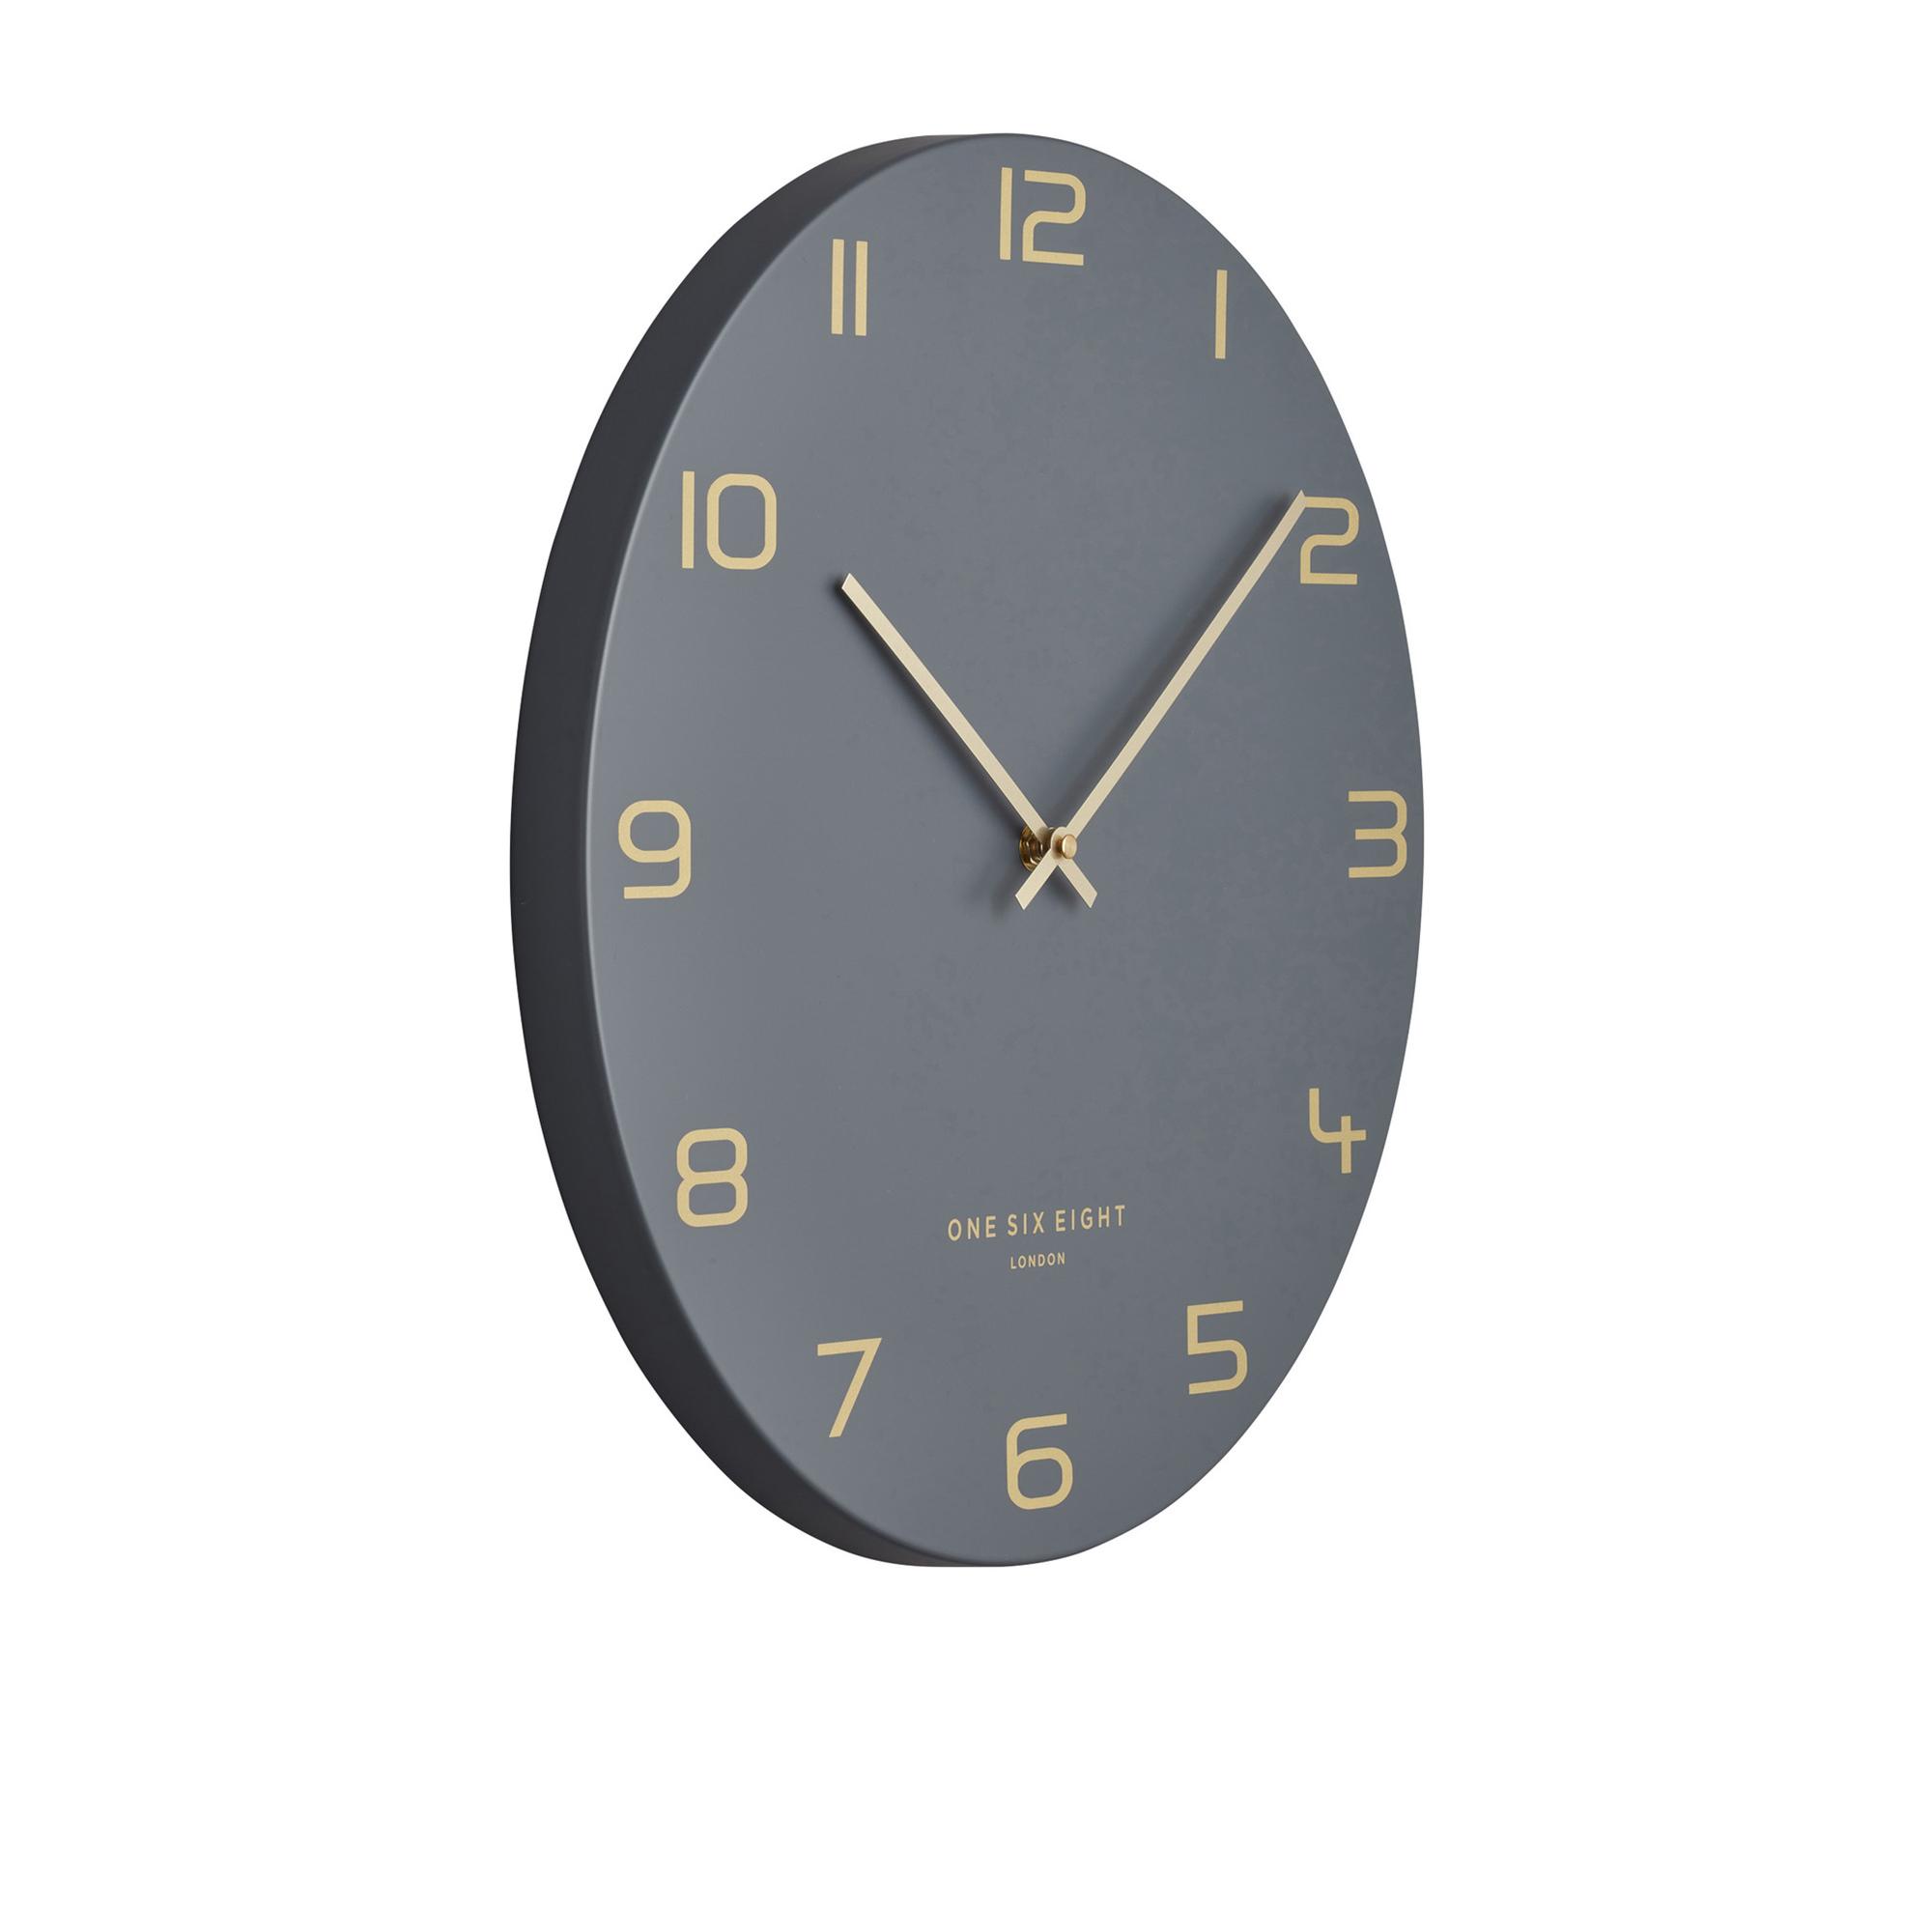 One Six Eight London Blake Silent Wall Clock 60cm Charcoal Grey Image 2